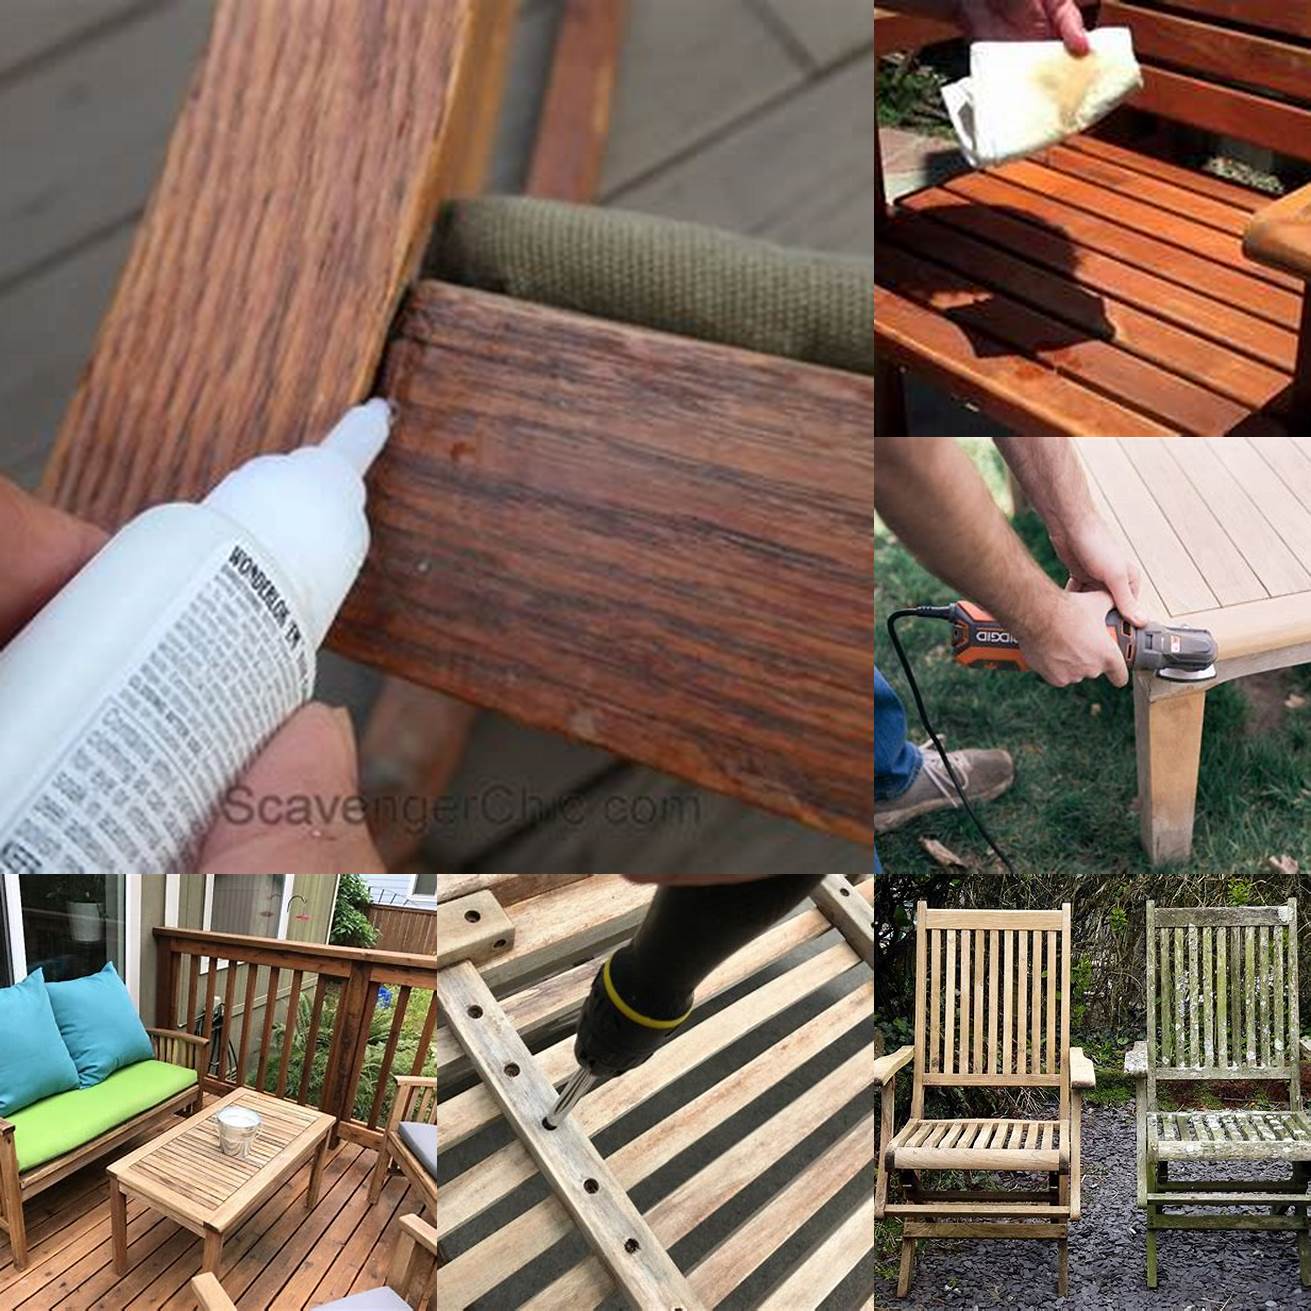 Tightening Loose Joints on Teak Outdoor Furniture